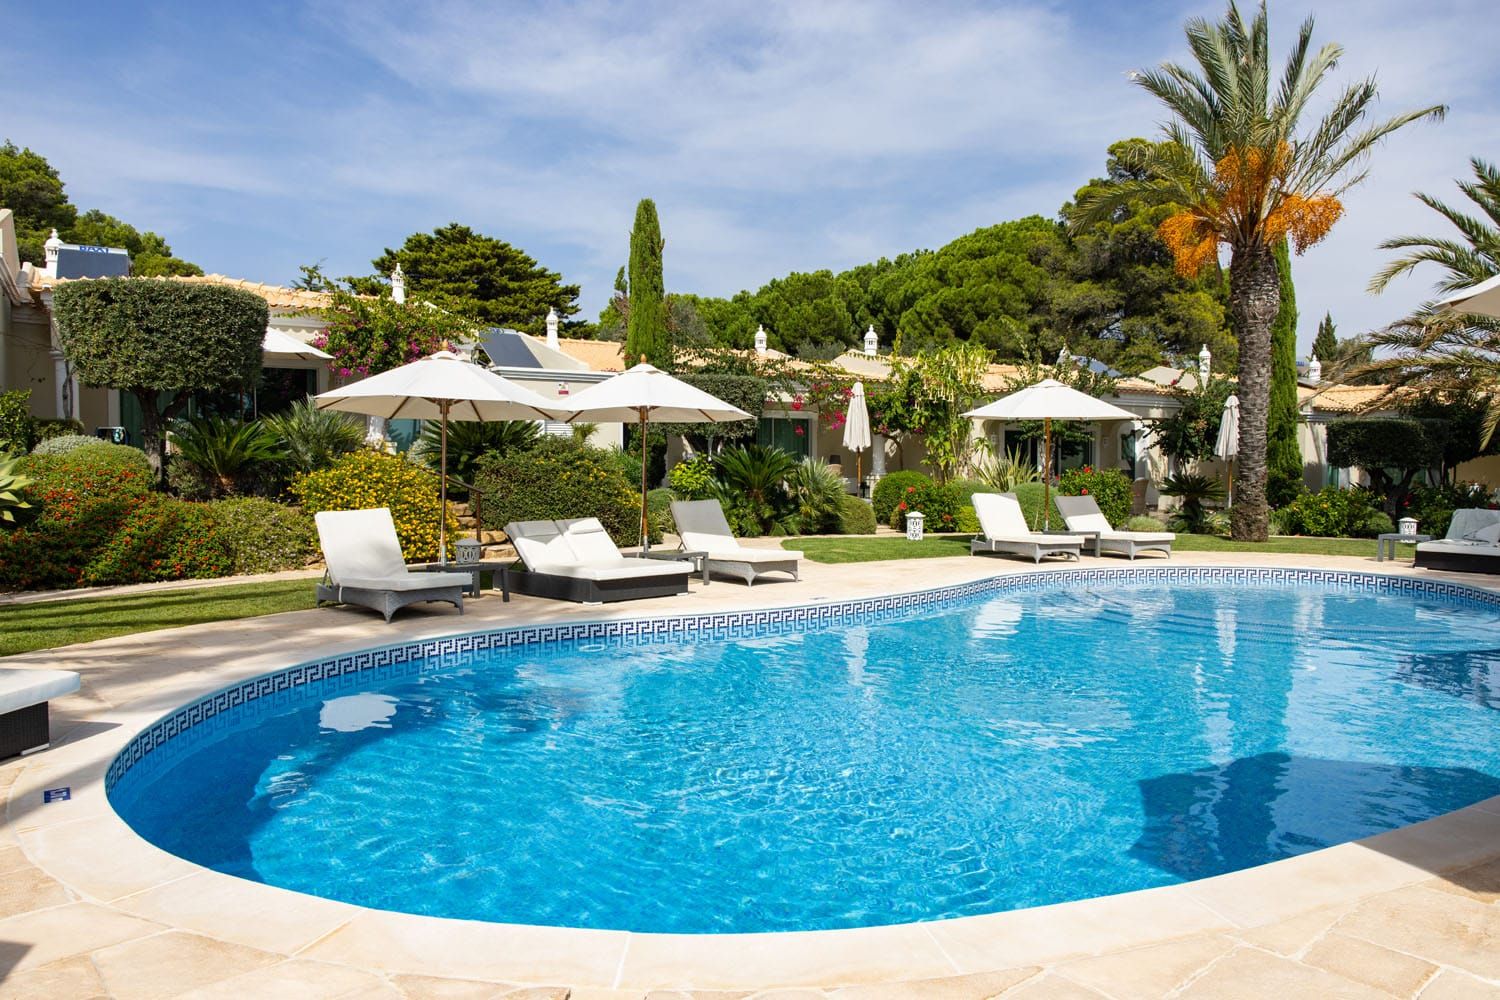 Best Hotels in Algarve Portugal